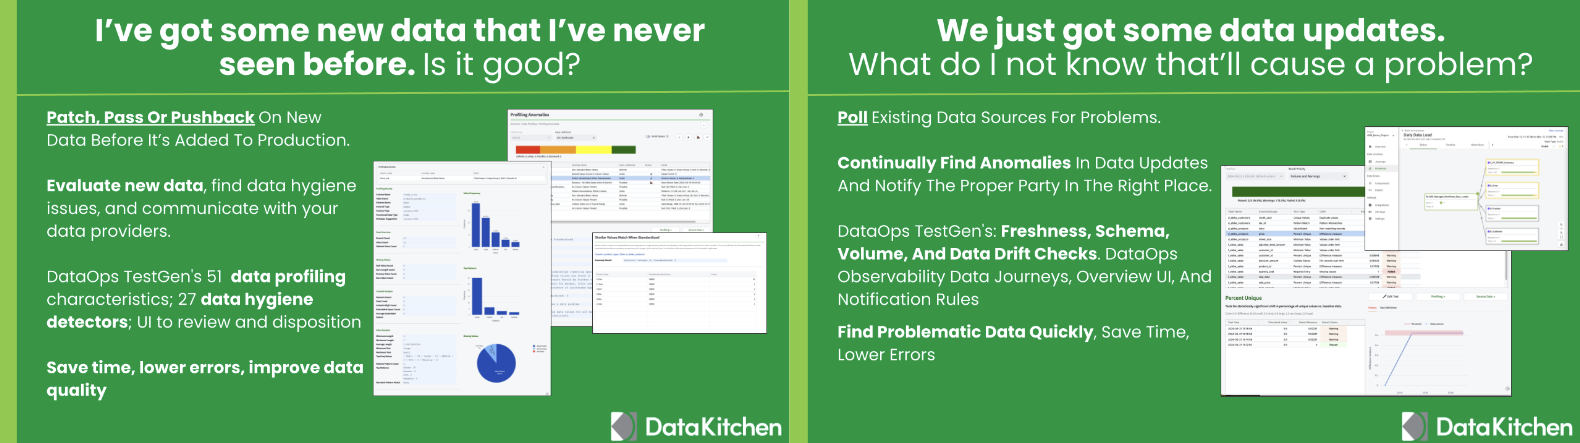 DatKitchen Open Source Data Observability Features 1